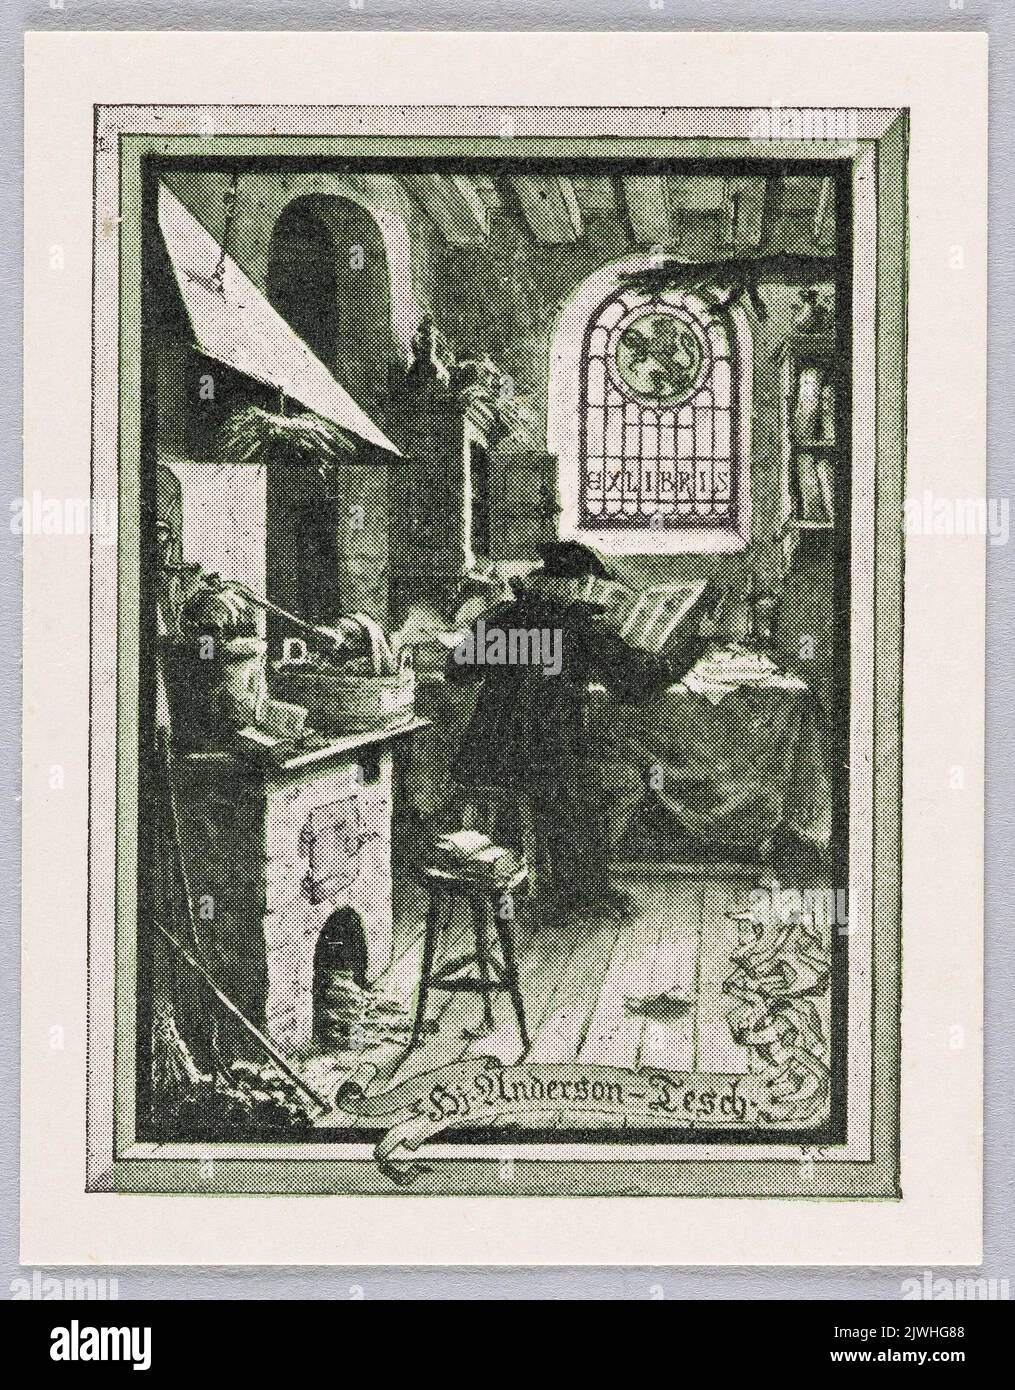 Libretto di Hj. Anderson-Tesch. Callmander, Carl Reinhold Constantin (1840-1922), designer Foto Stock